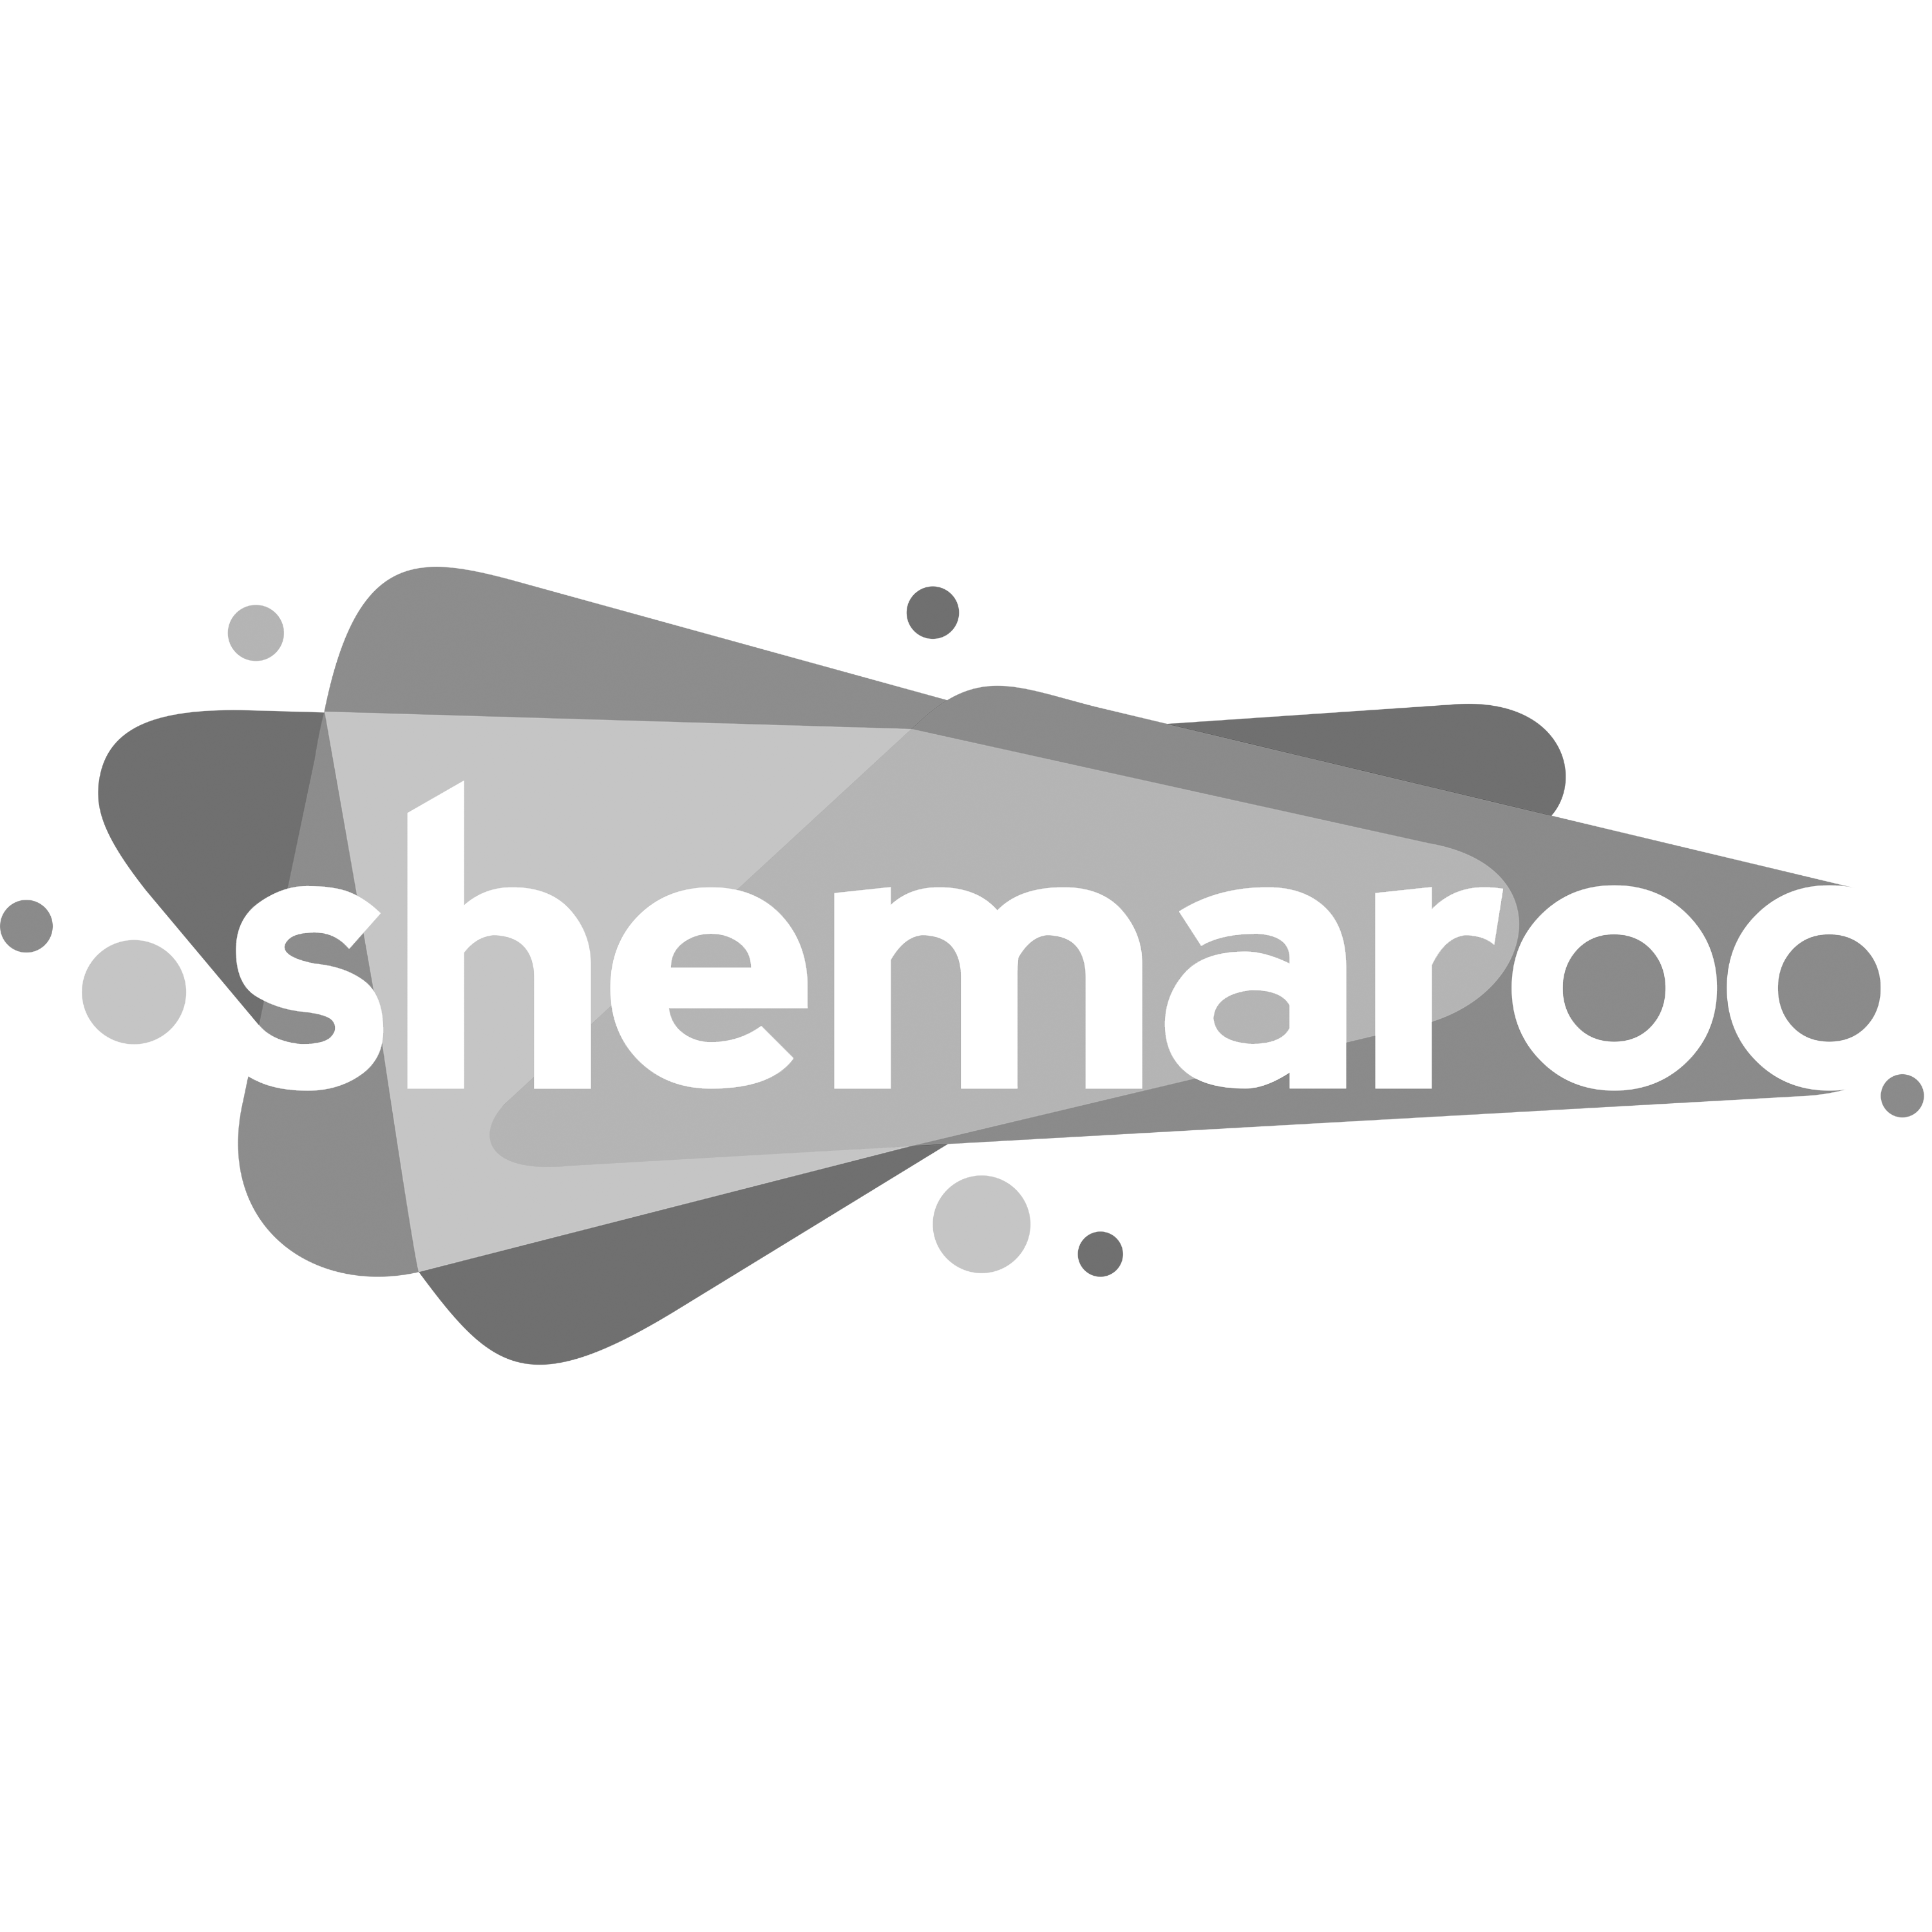 Shemaroo Logo Transparent Clipart